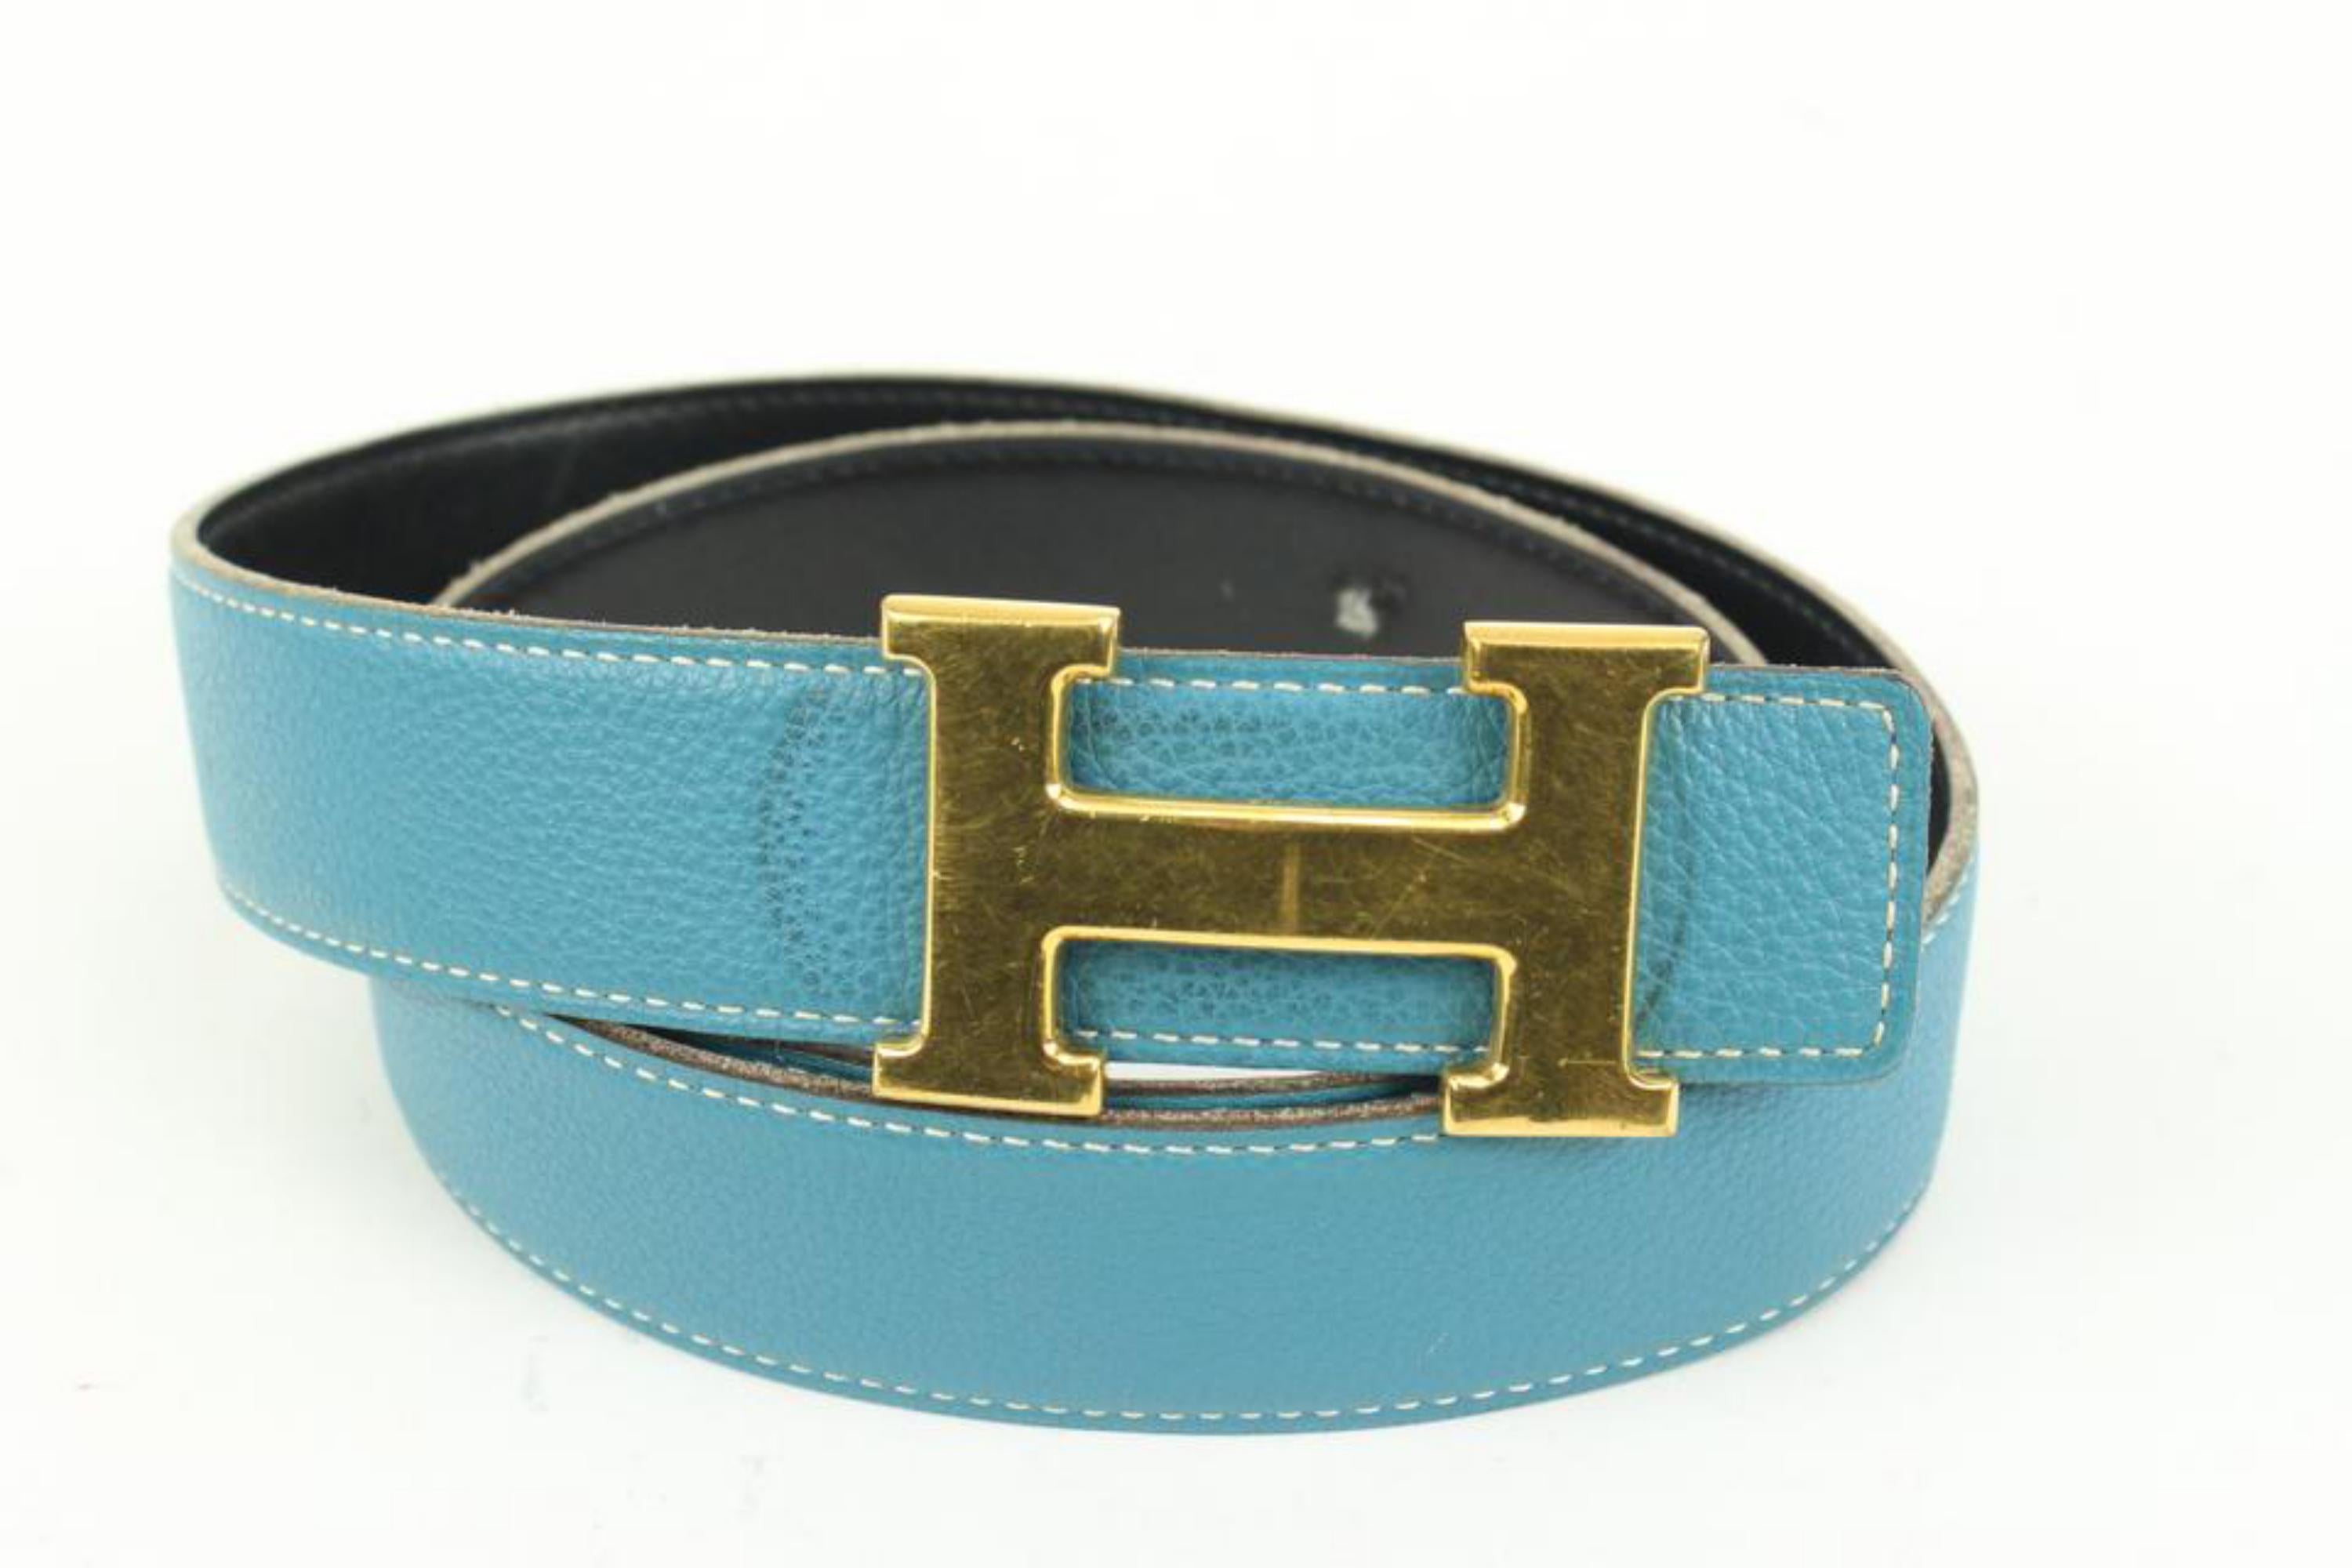 Kit ceinture logo H réversible 32 mm noir x bleu Jean x or 41h55